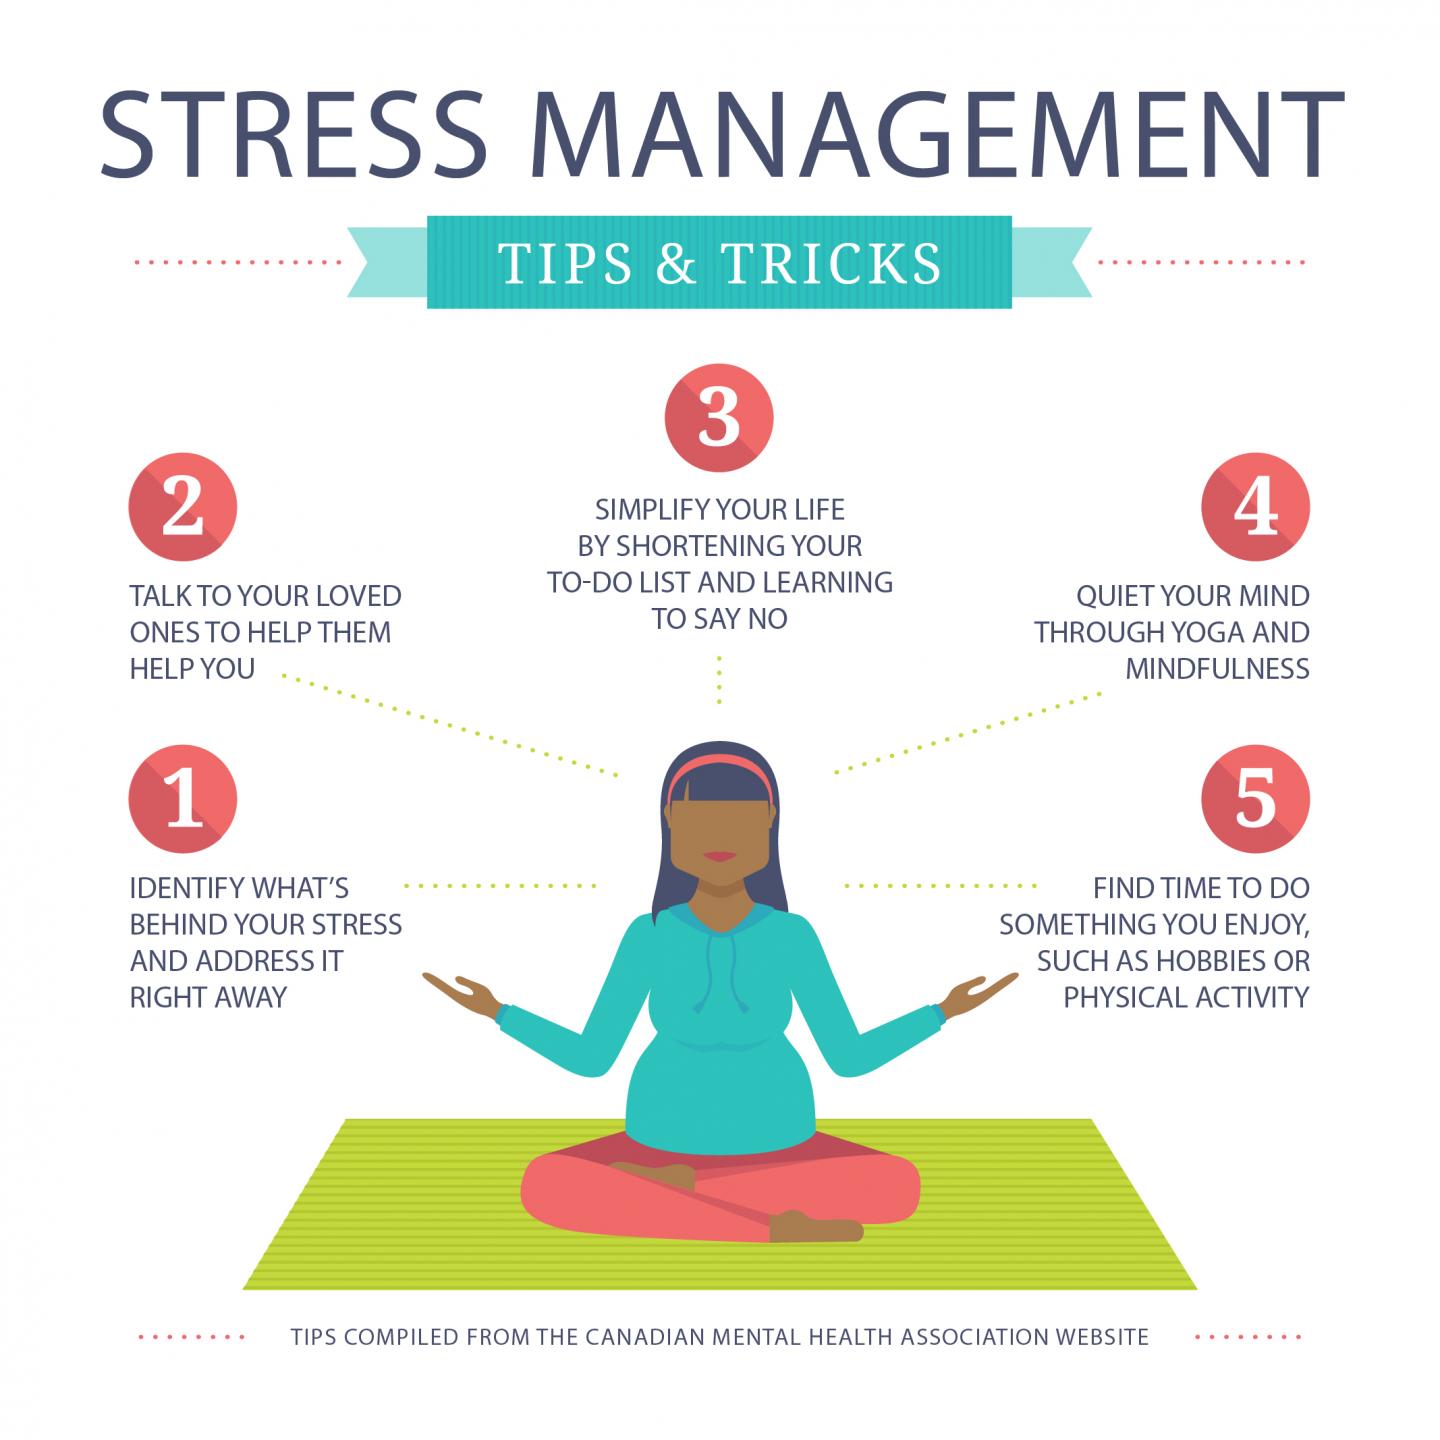 Stress Management Tips & Tricks